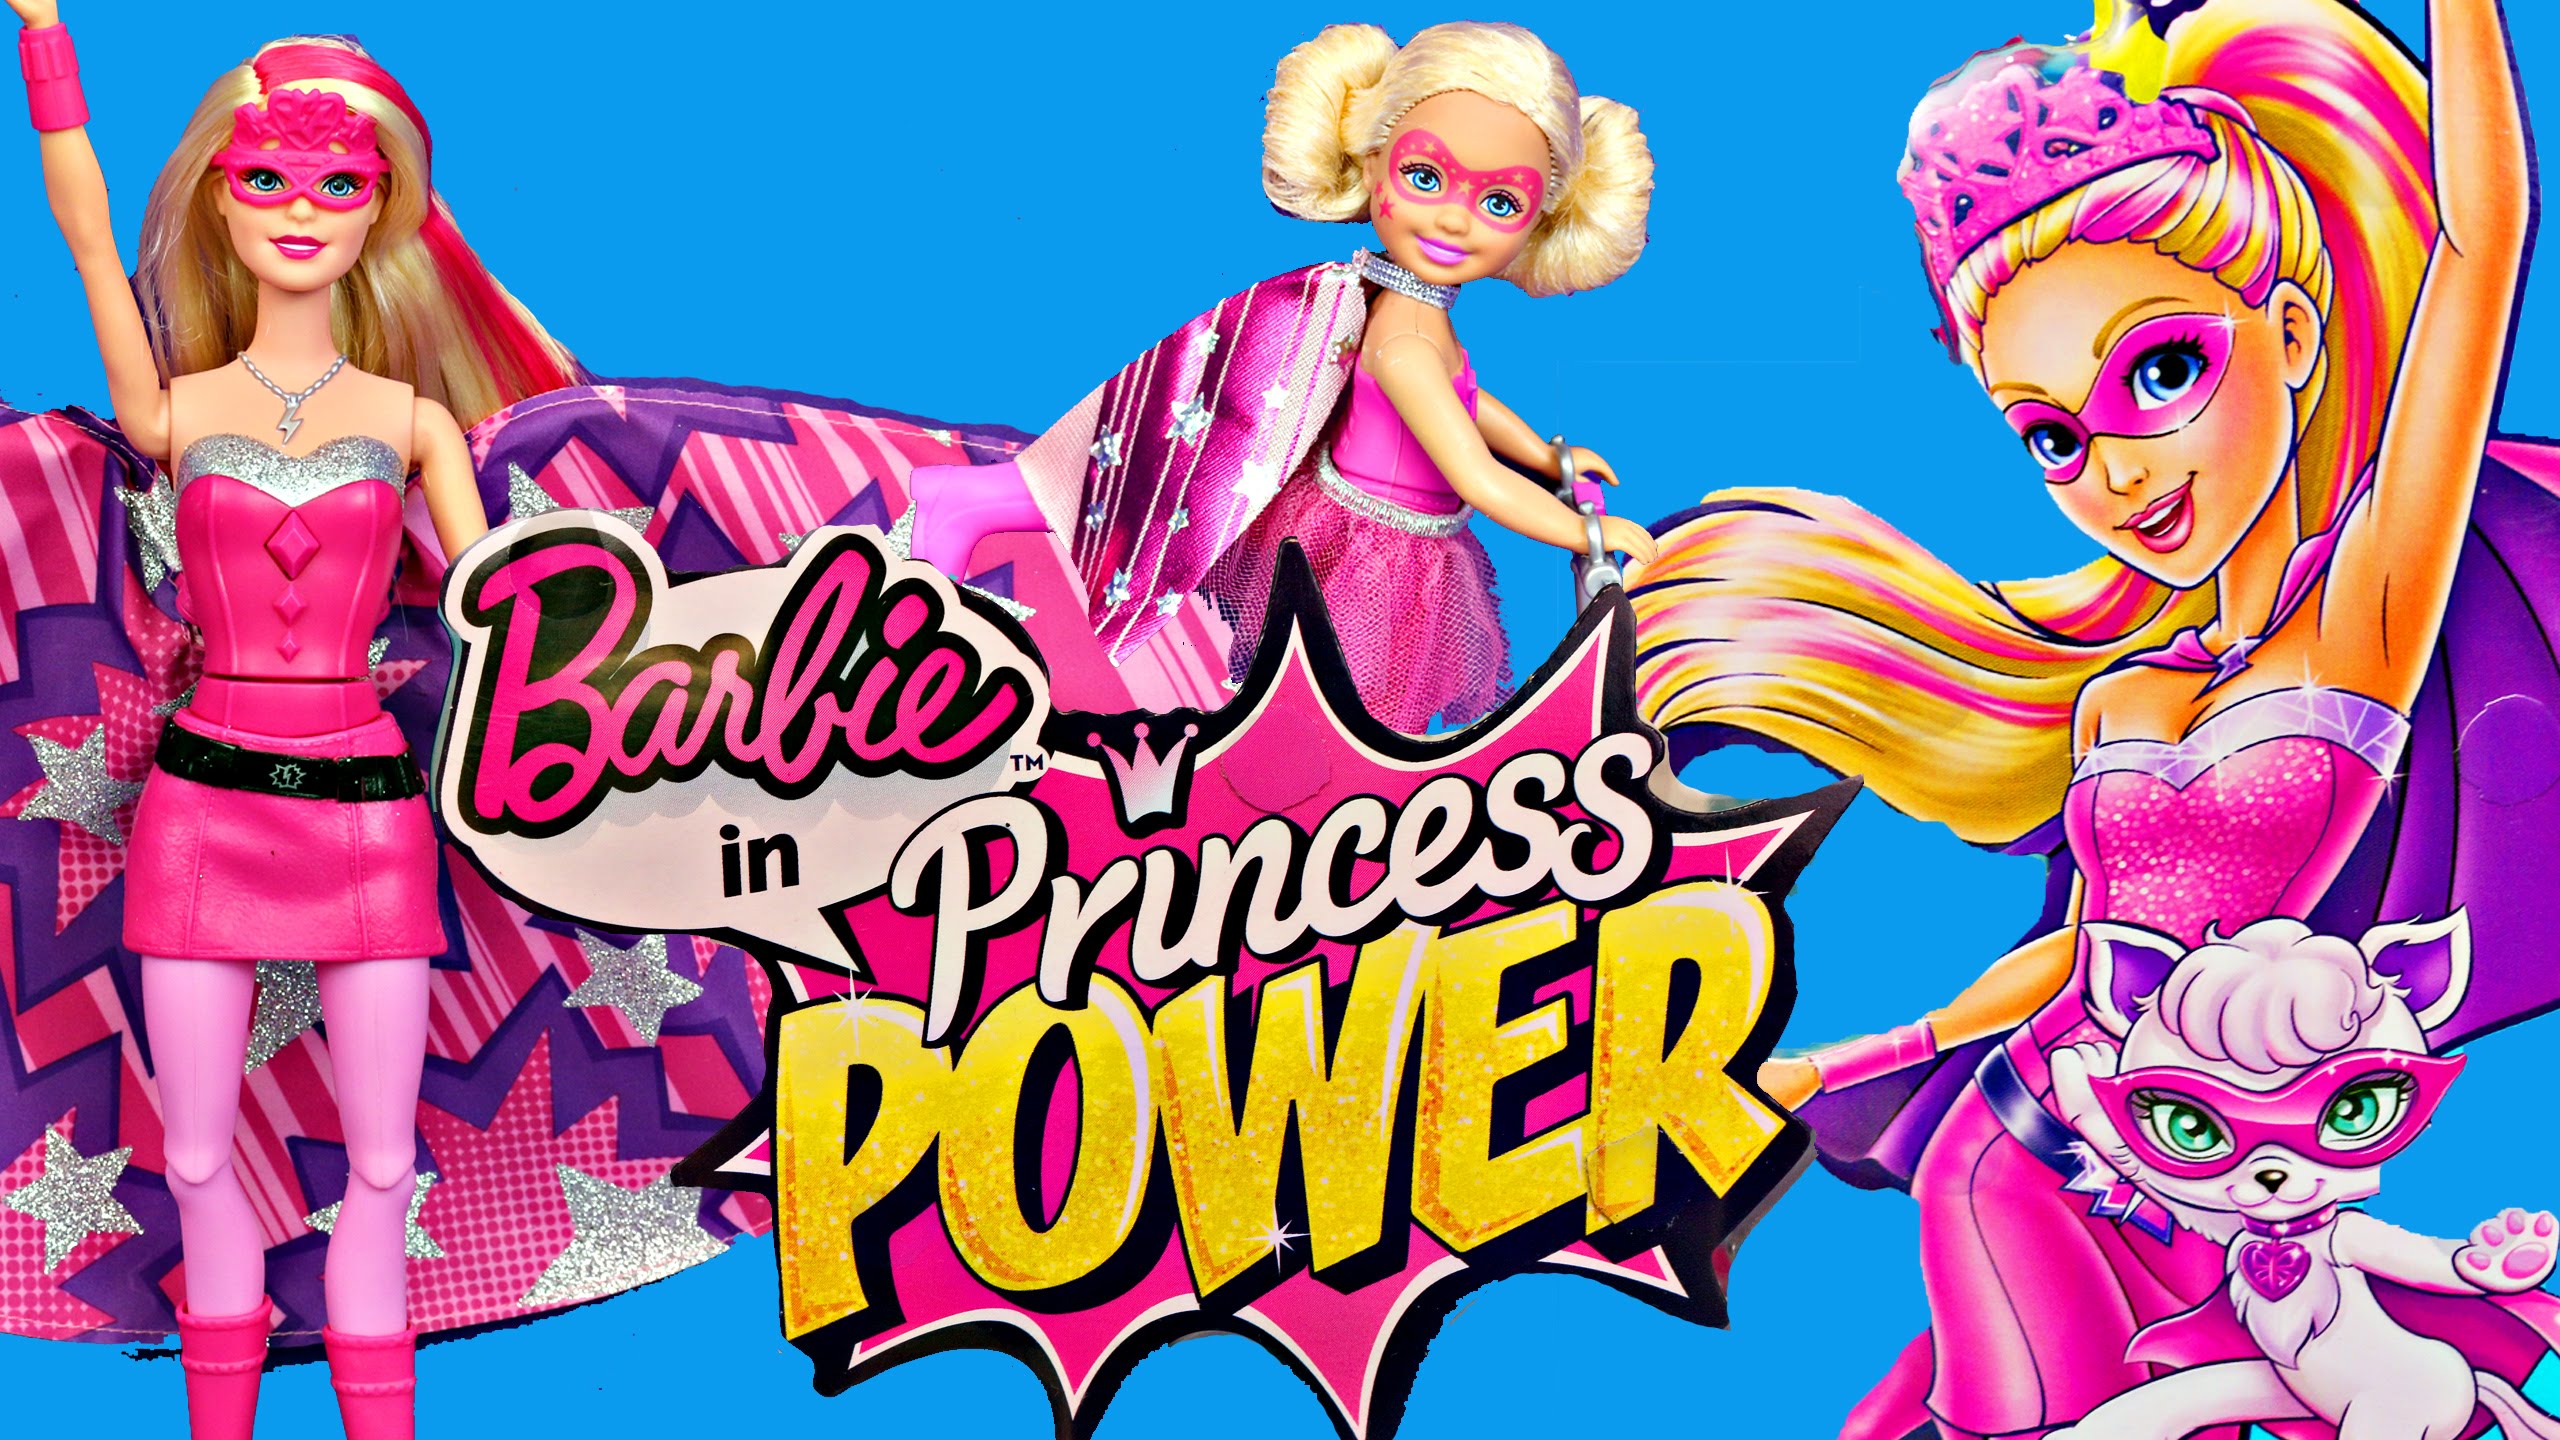 movie, barbie in princess power